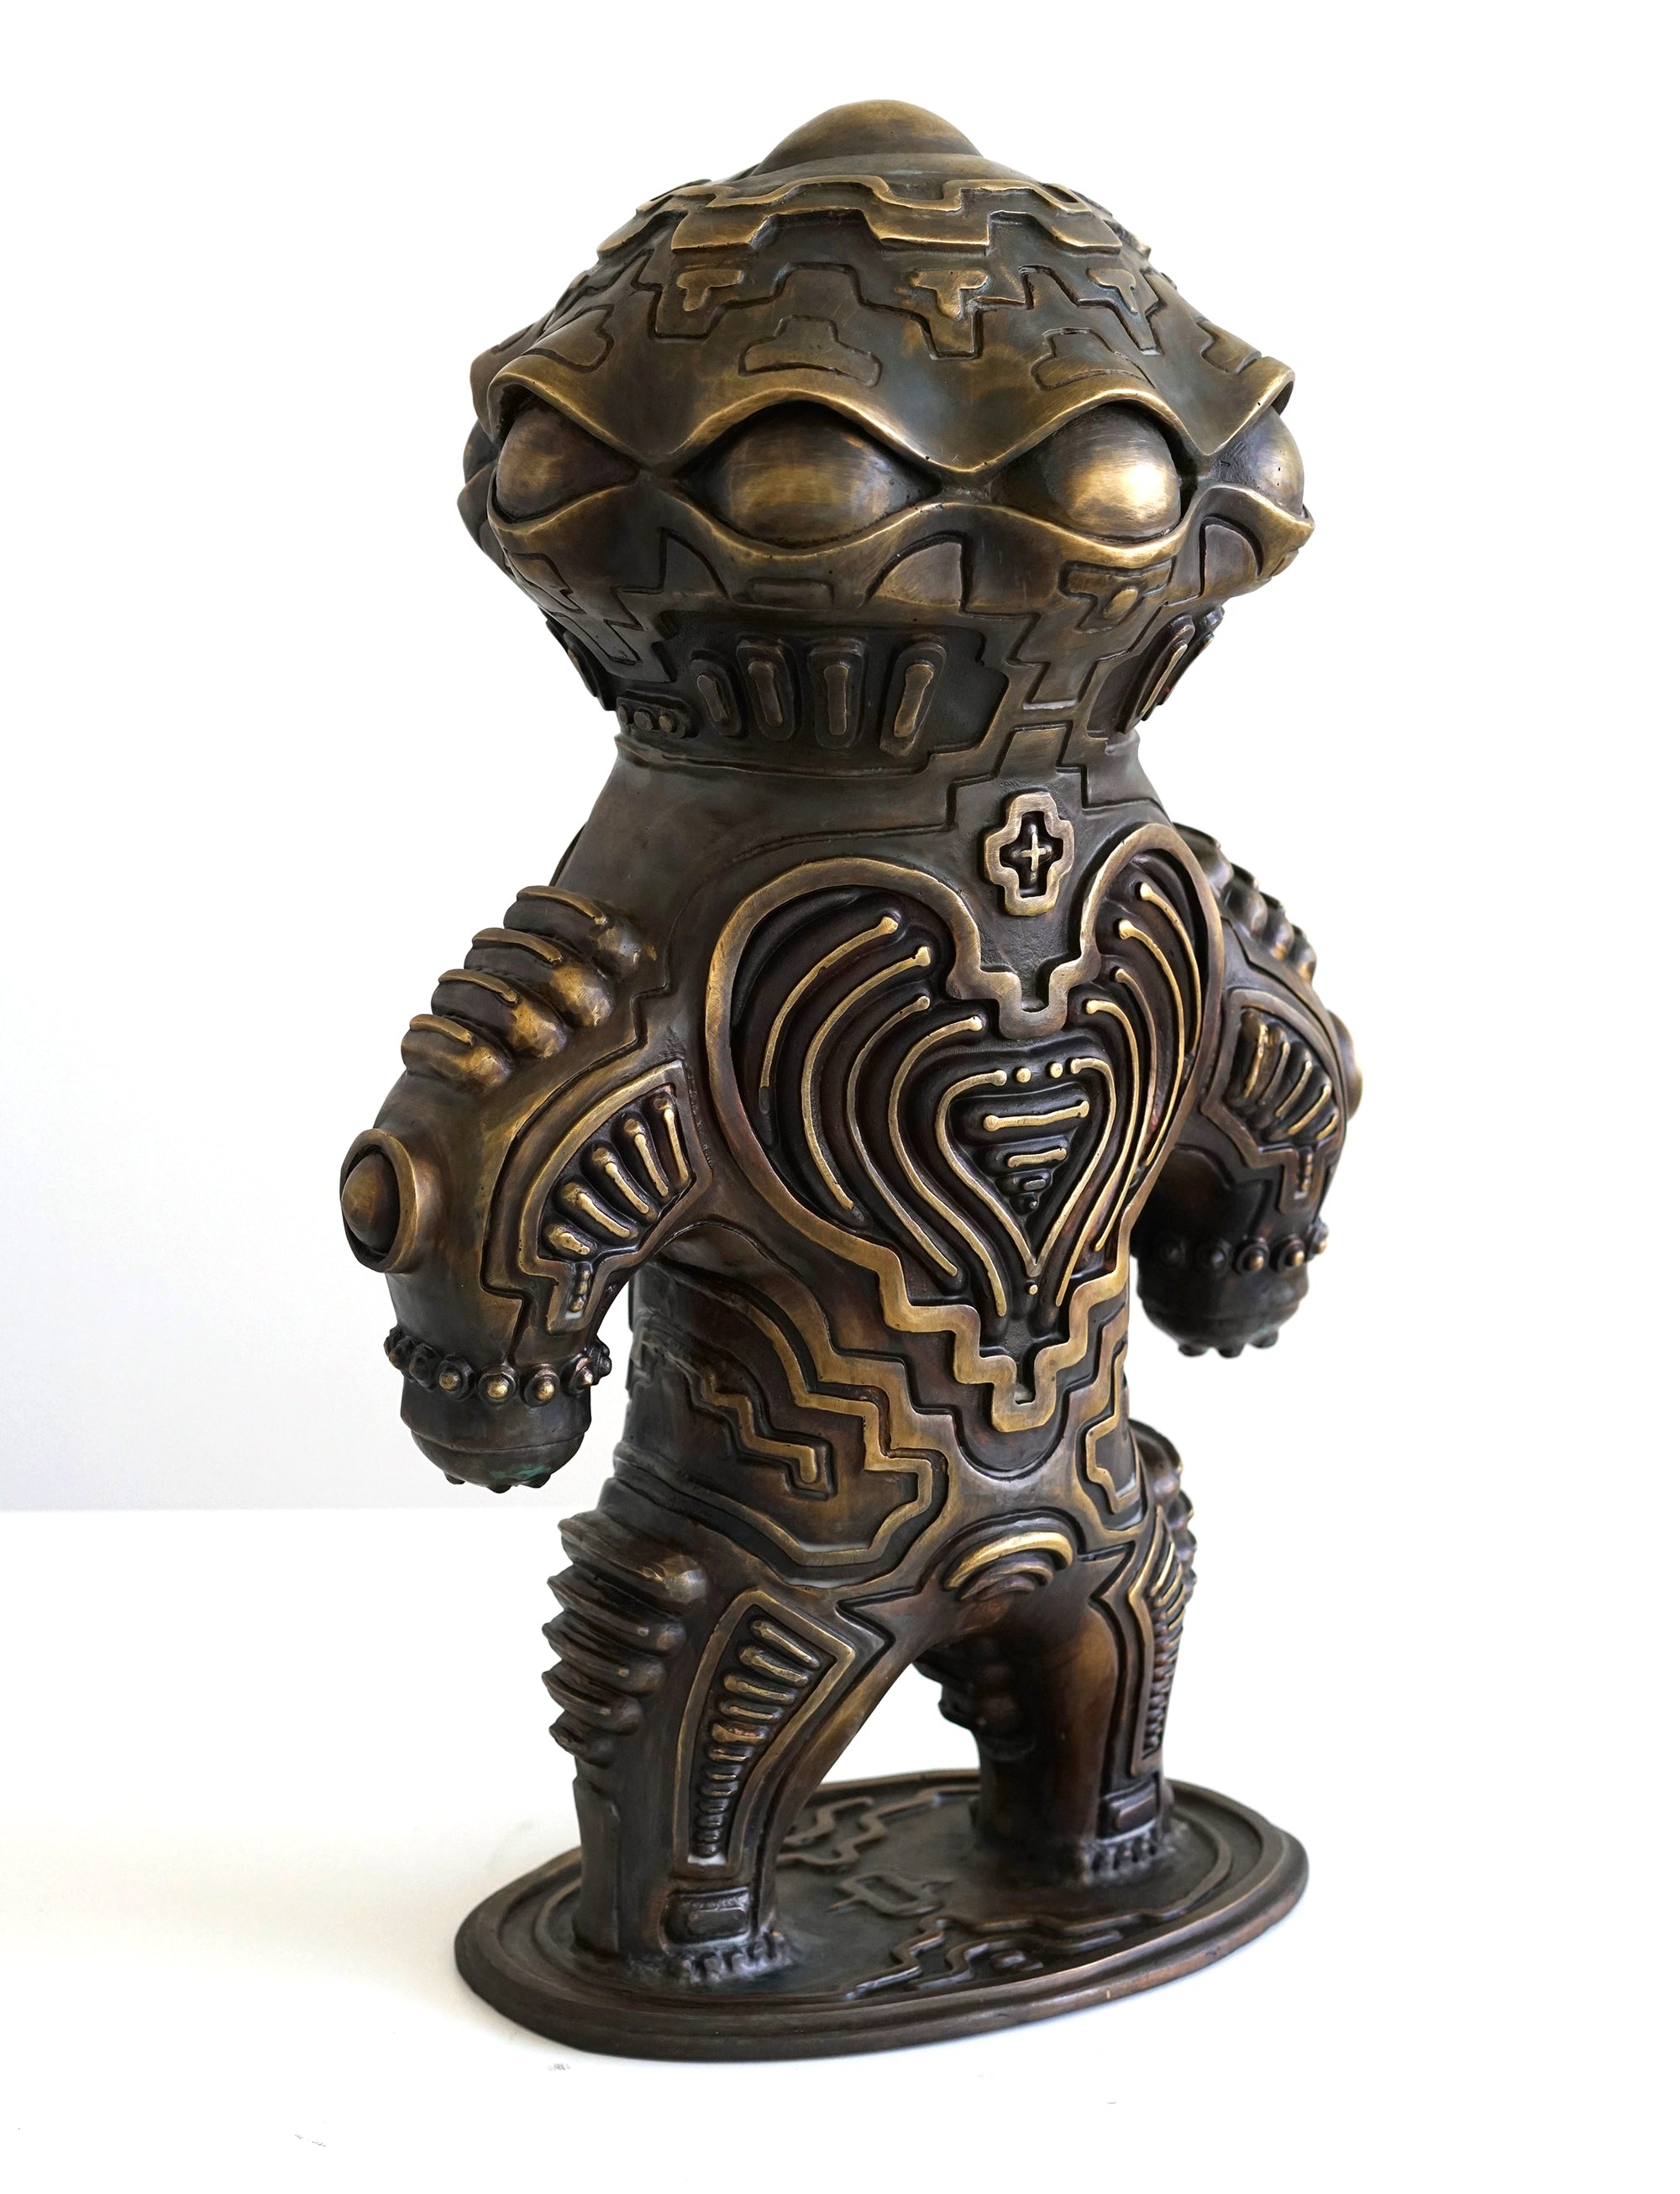 Alien Dogu Bronze Sculpture by Ben Ridgway